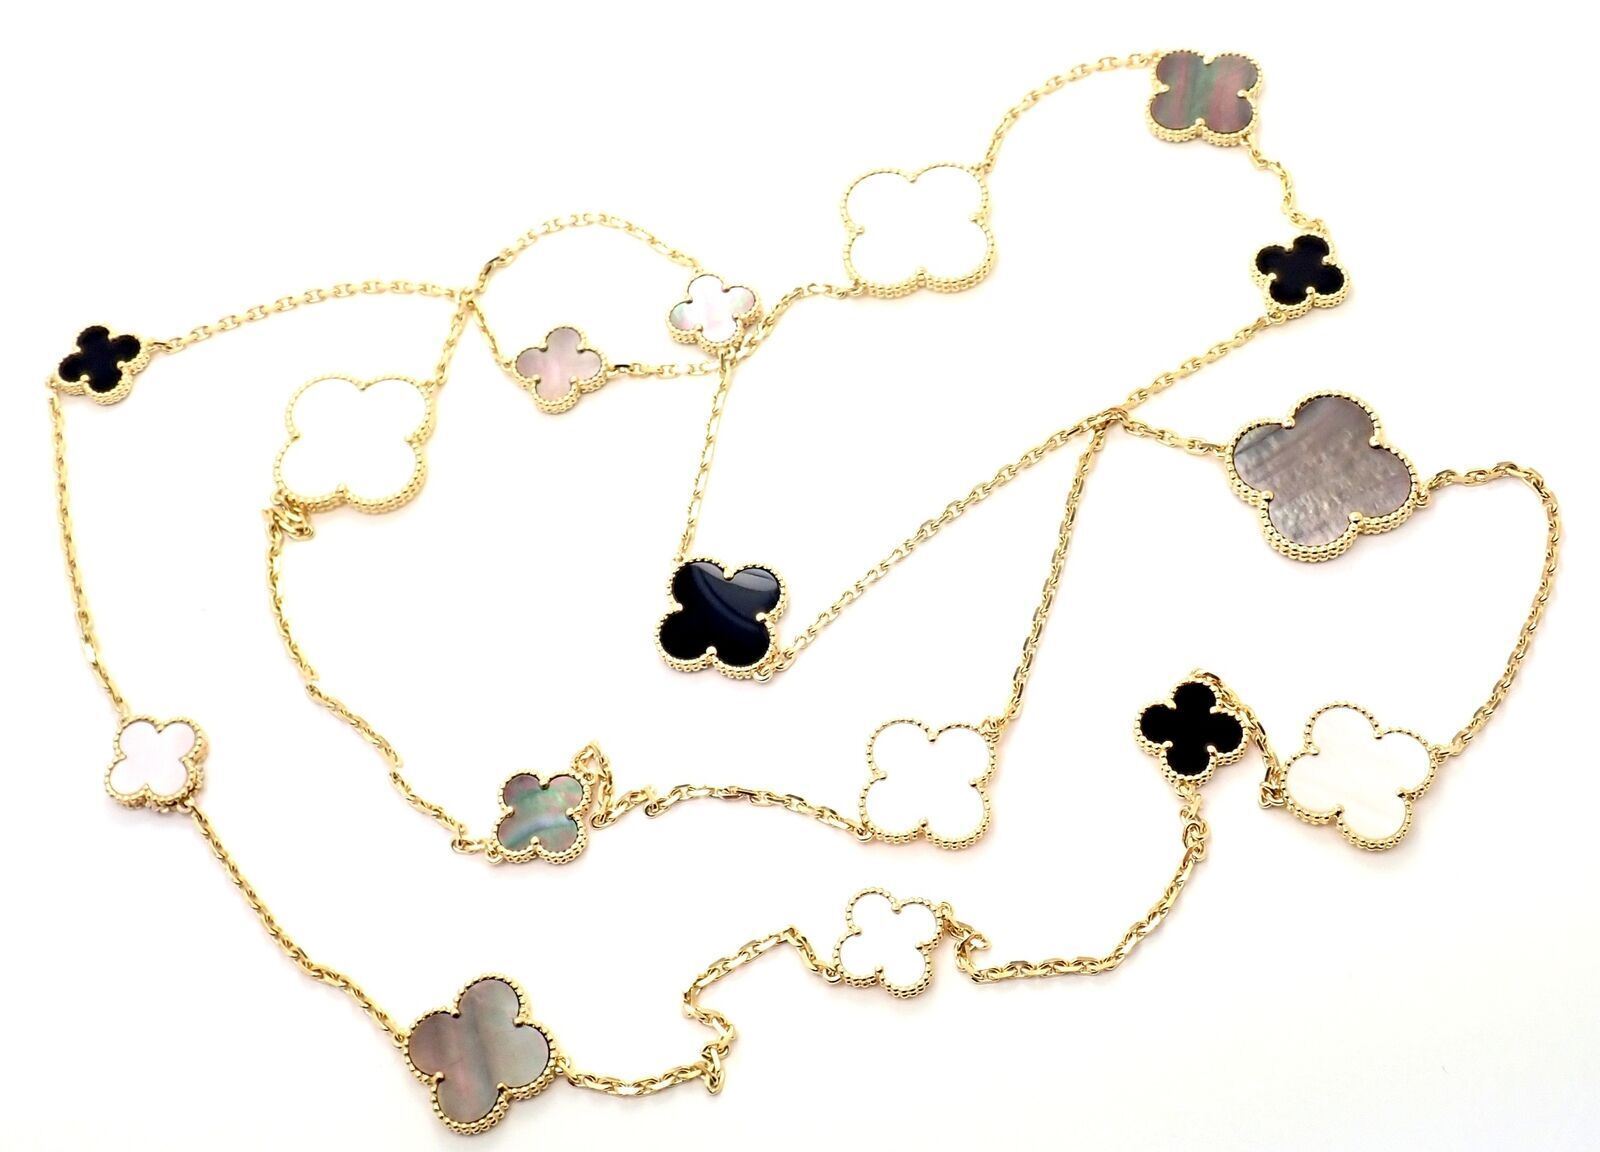 Van Cleef & Arpels Jewelry & Watches:Fine Jewelry:Necklaces & Pendants Van Cleef & Arpels 18k Gold Magic Alhambra Mother Of Pearl Long Necklace Cert.